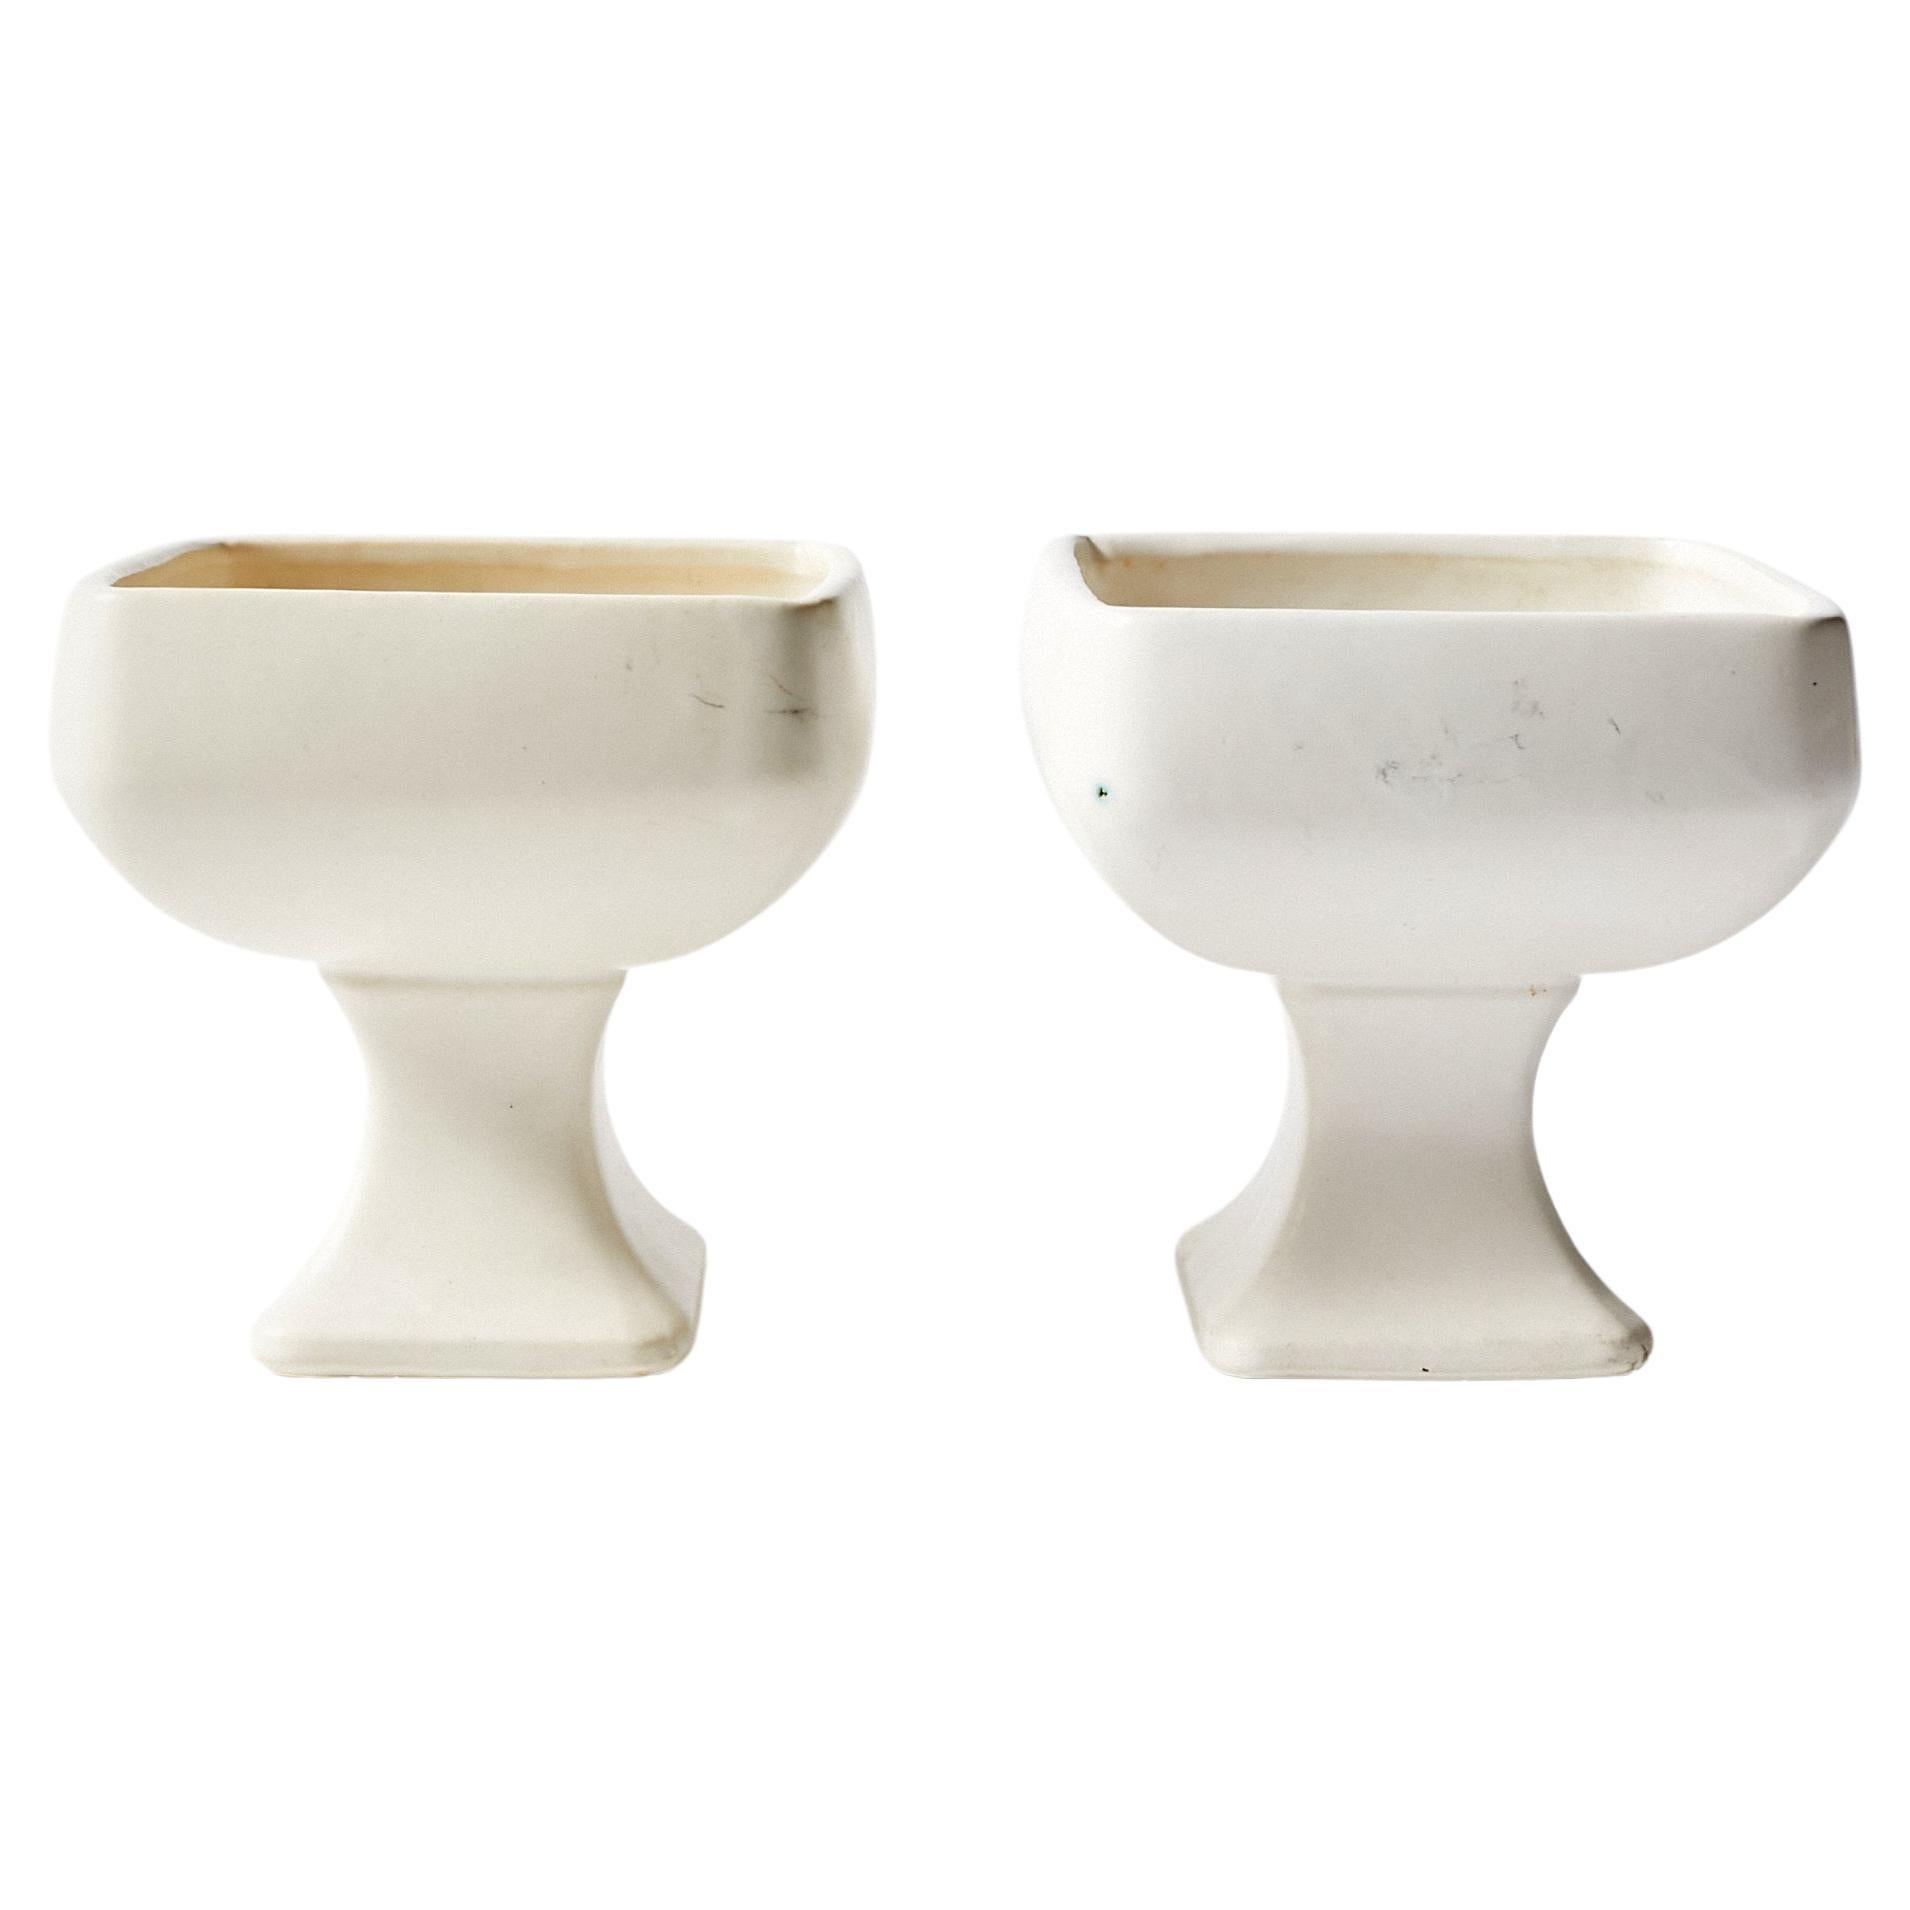 Pair of Ceramic White Vases Designed by Nelson McCoy for Floraline